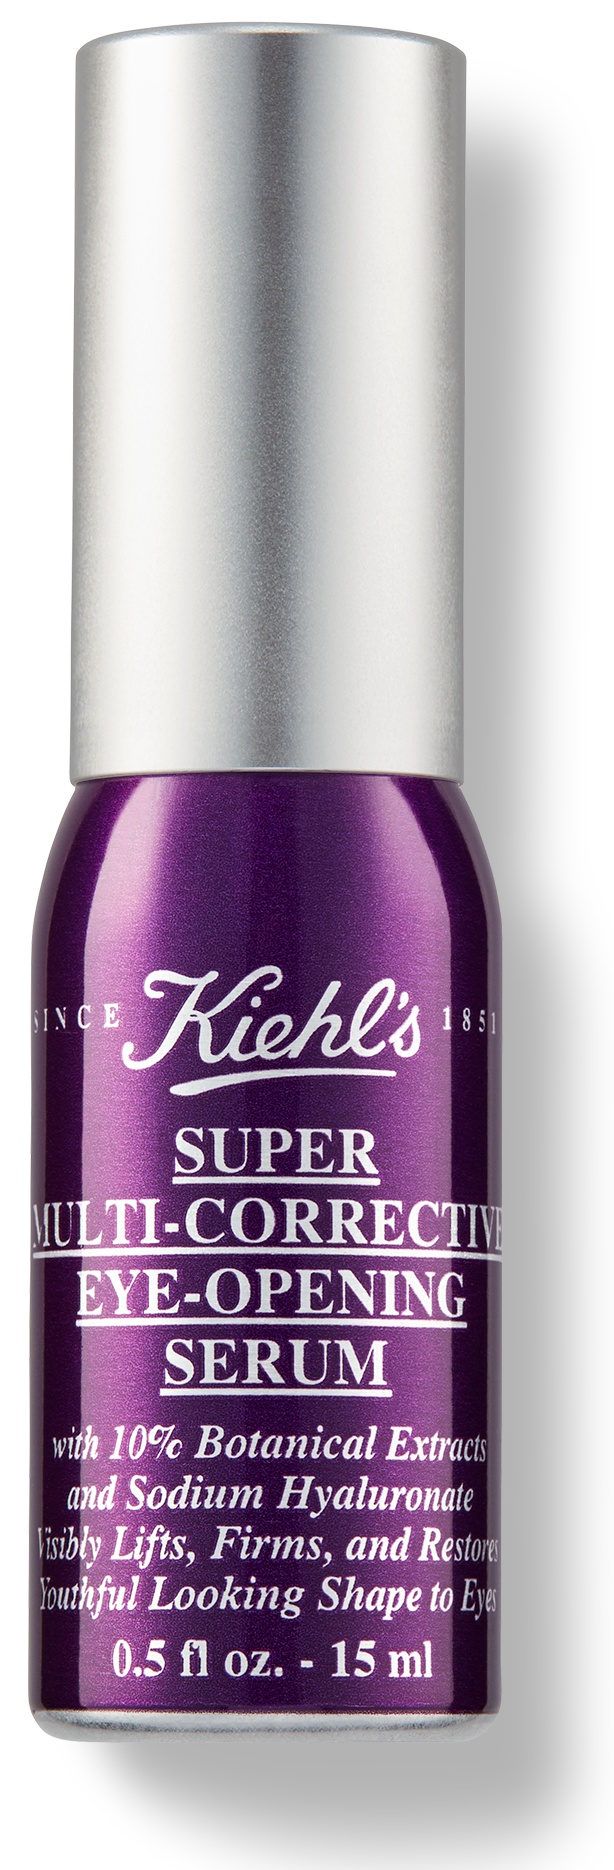 Kiehl’s Super Multi-Corrective Eye-Opening Serum